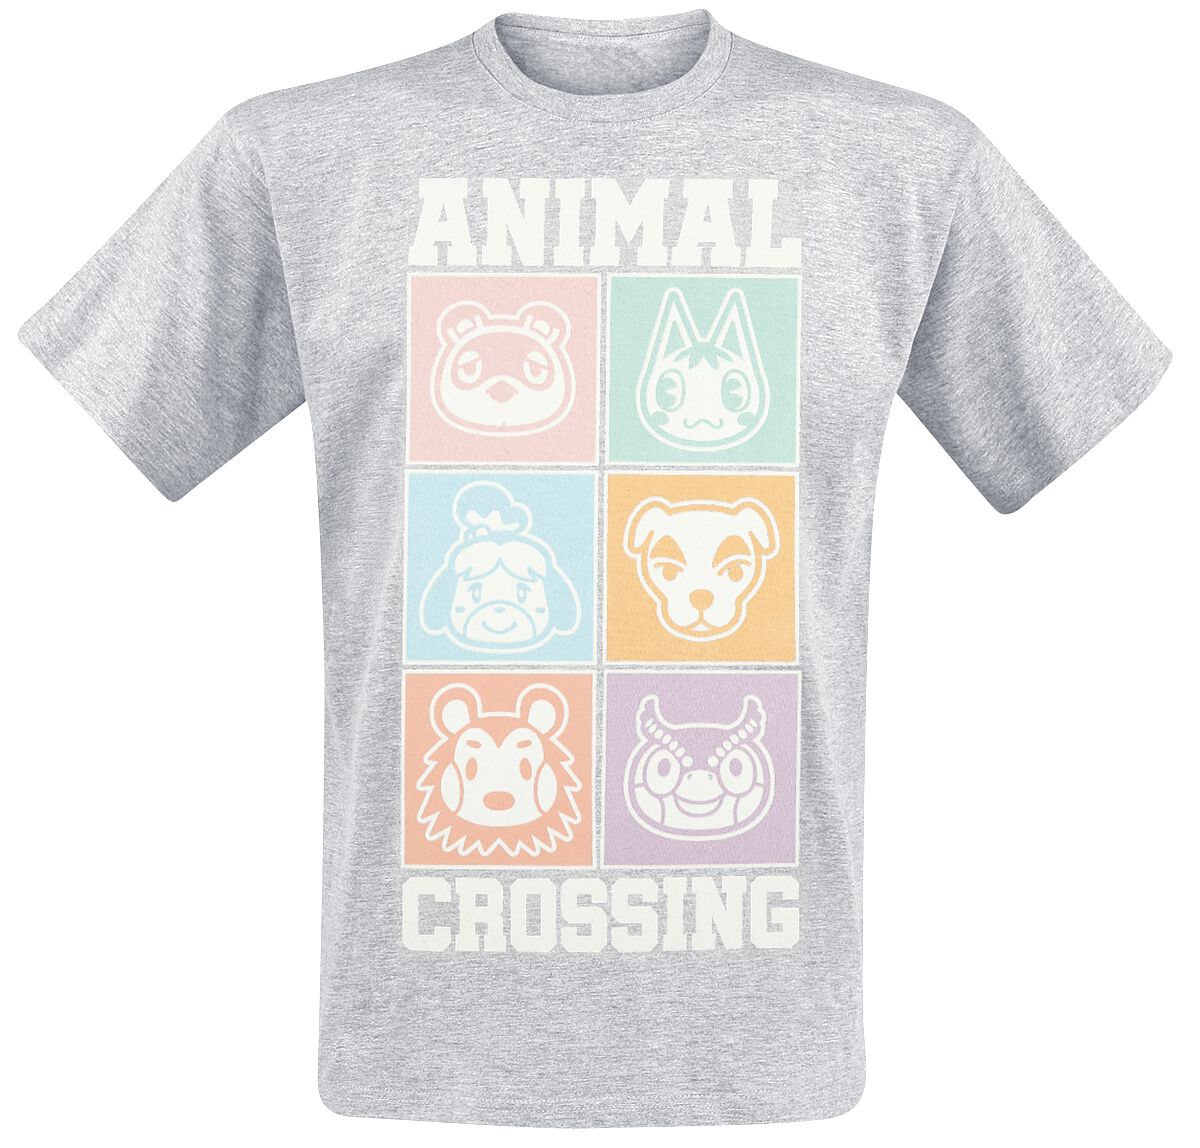 Animal Crossing New Horizons - Pastel Square T-Shirt mottled grey